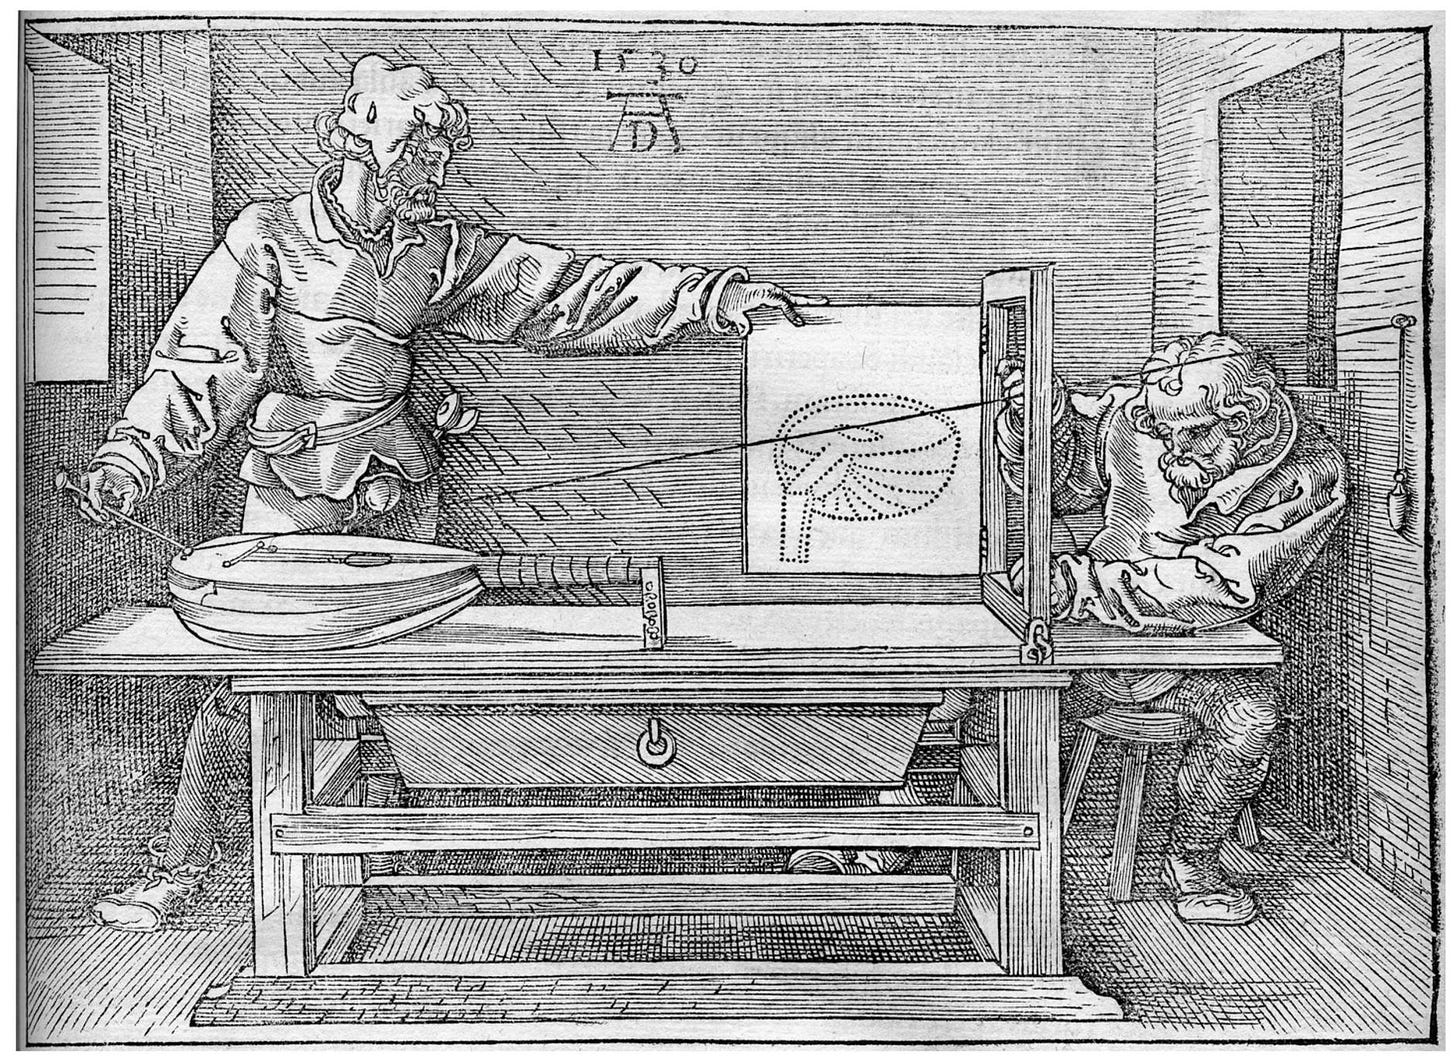 What is Albrecht Dürer's Perspective Machine drawing style? - Graphic  Design Stack Exchange